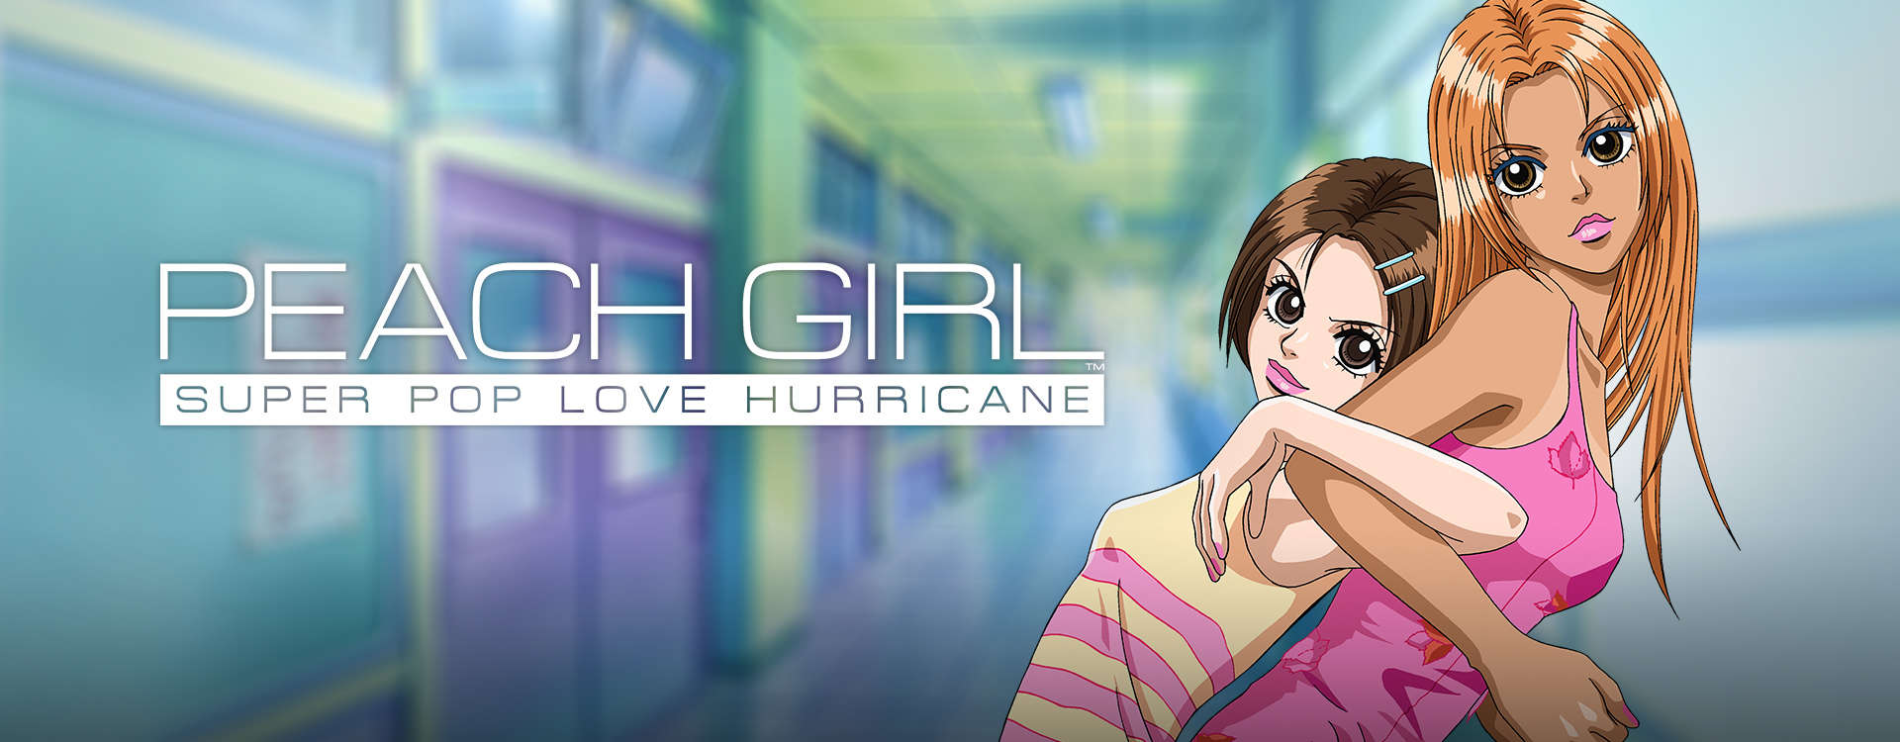 Peach Girl Super Pop Love Hurricane Animebricks 